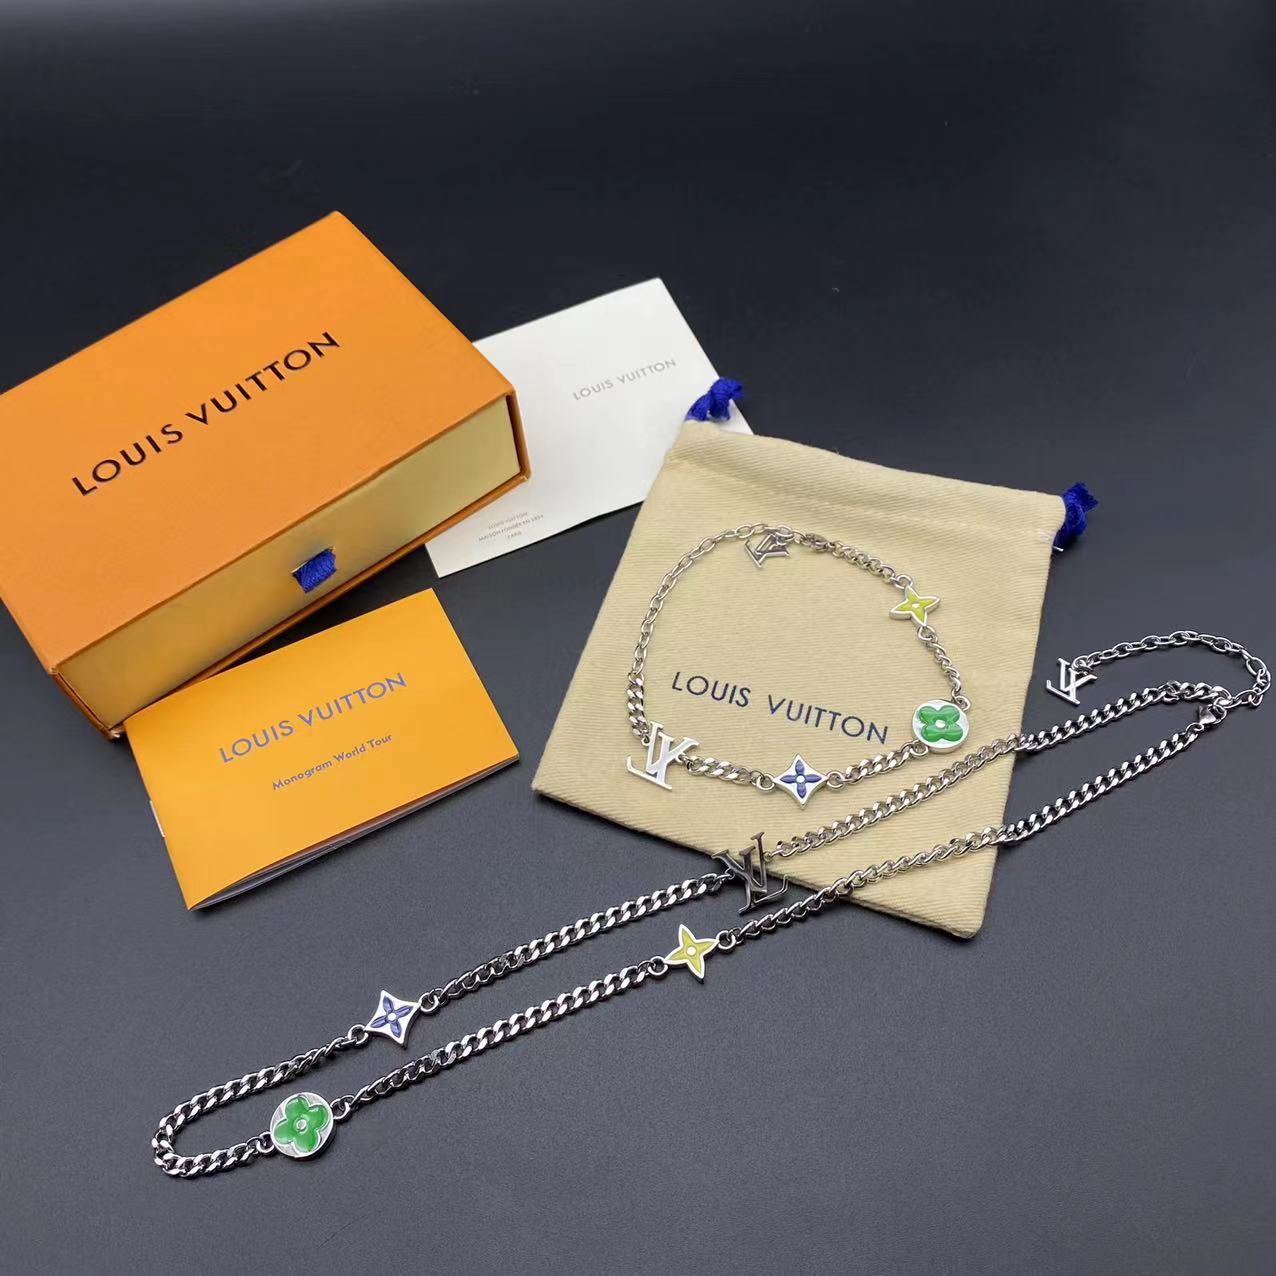 118 RMB Bracelet / 158 RMB Necklace